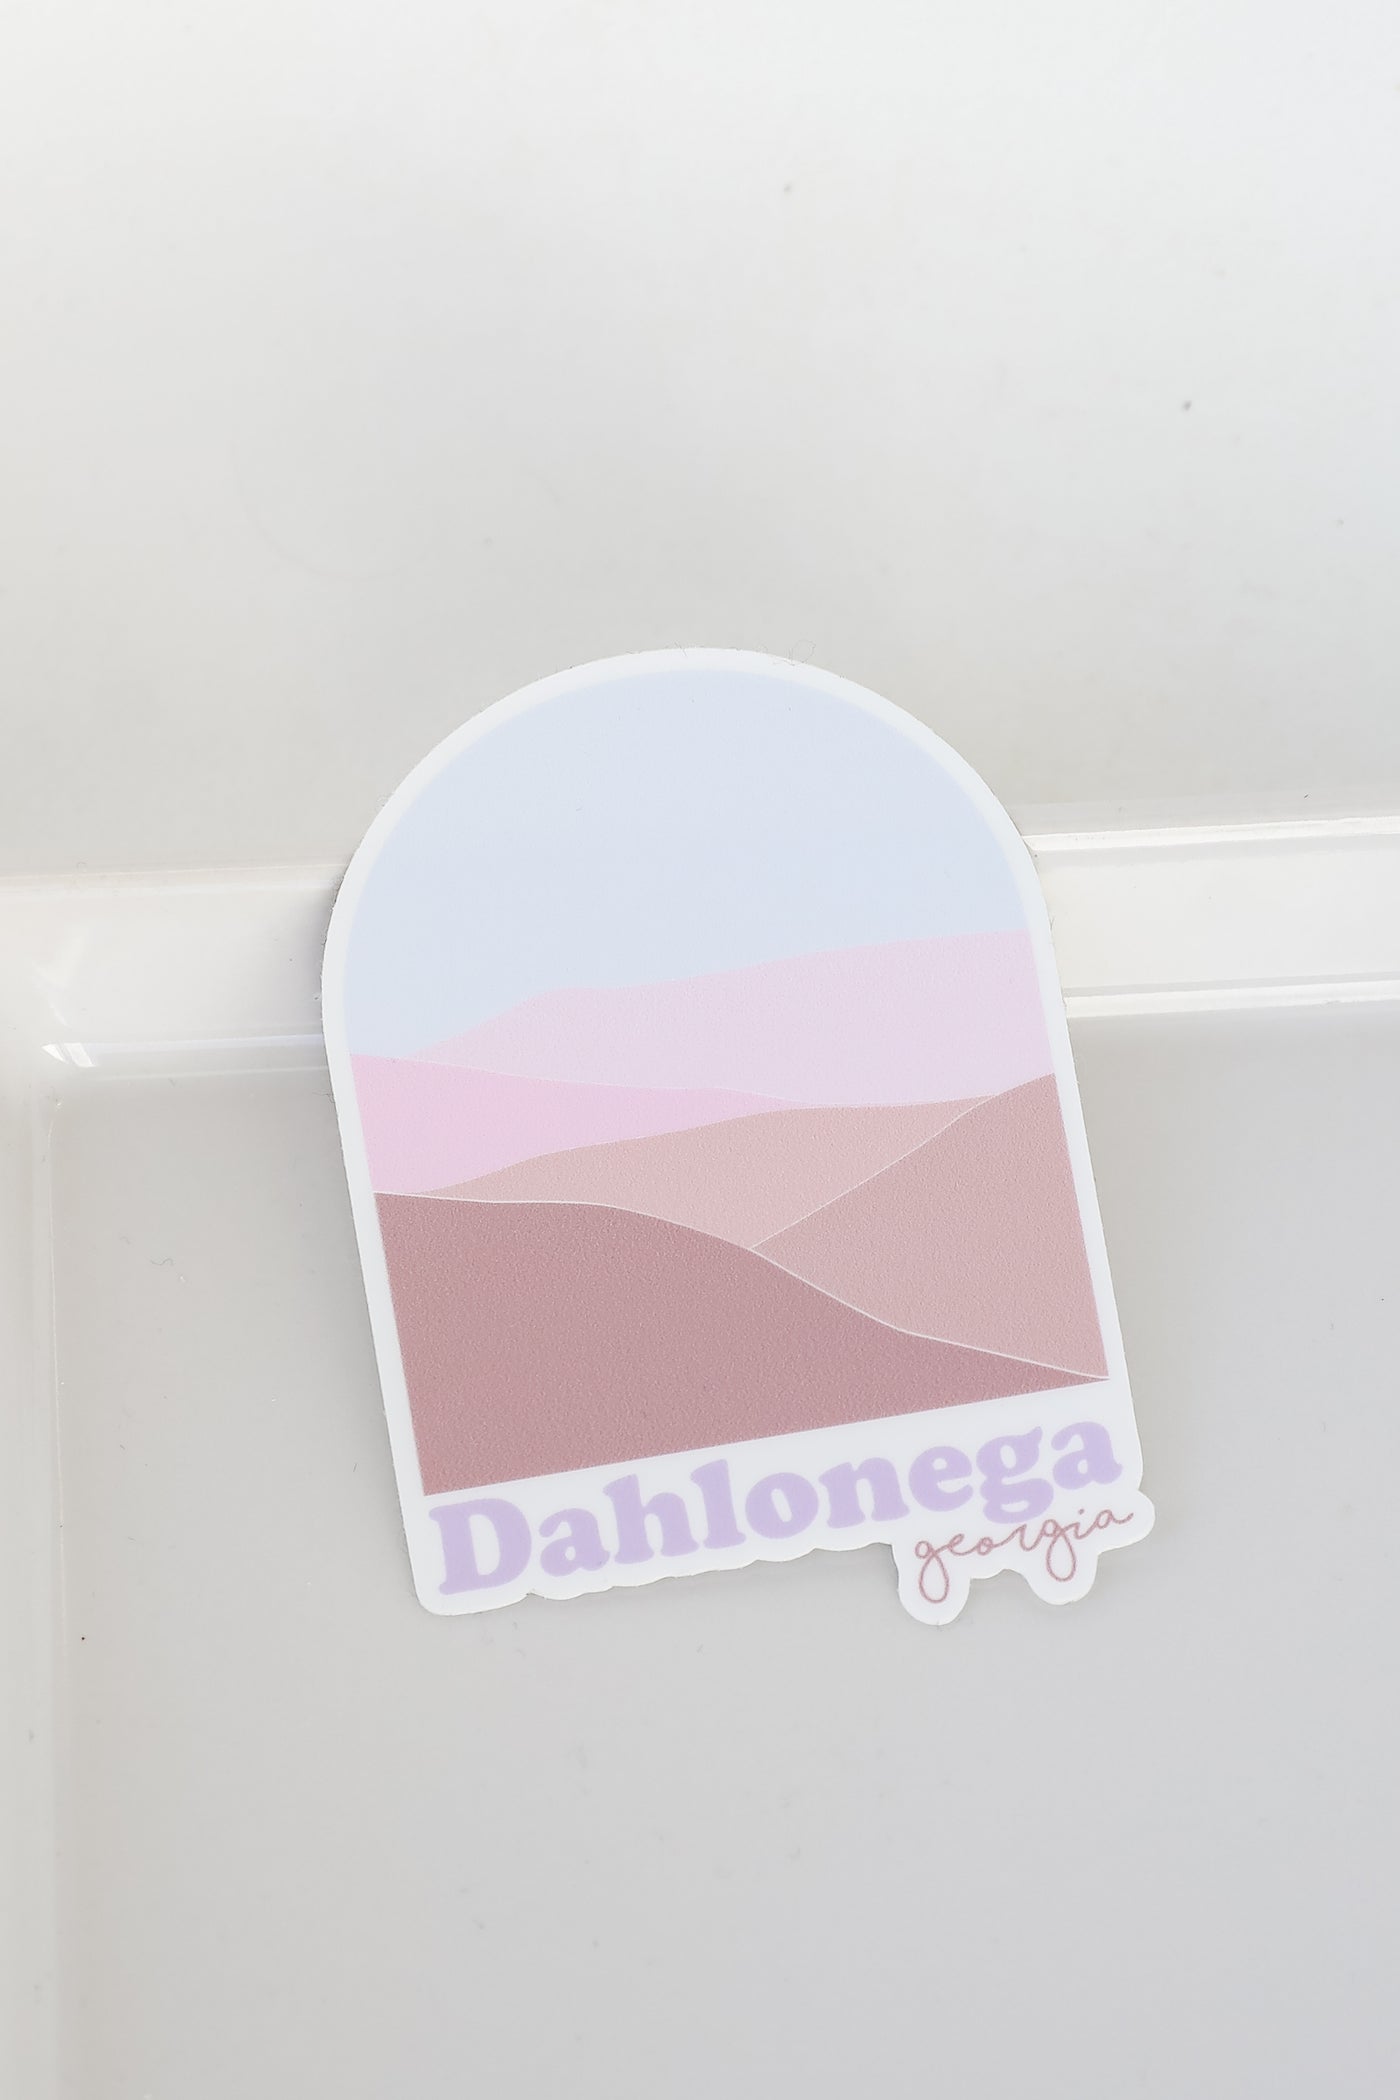 Round Dahlonega Georgia Mountain Sticker in blush